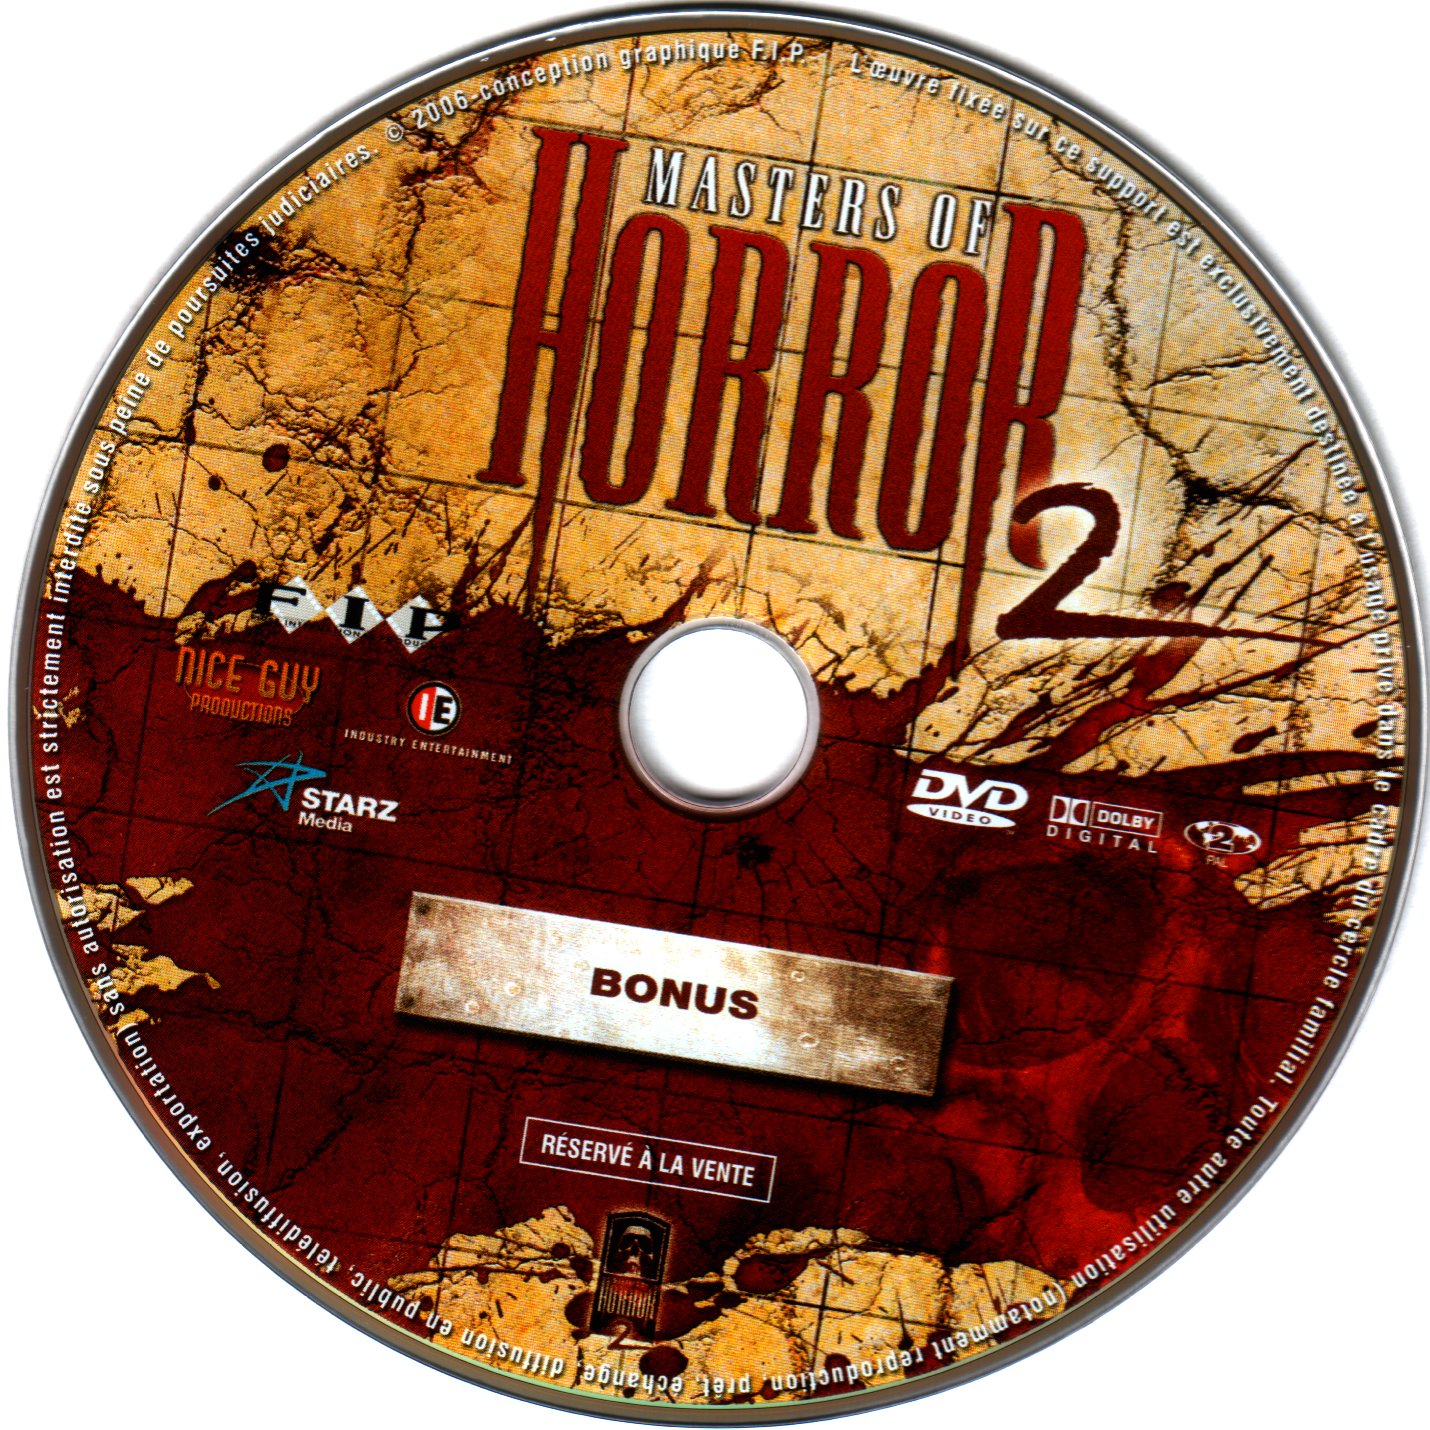 Masters of horror Saison 2 vol 7